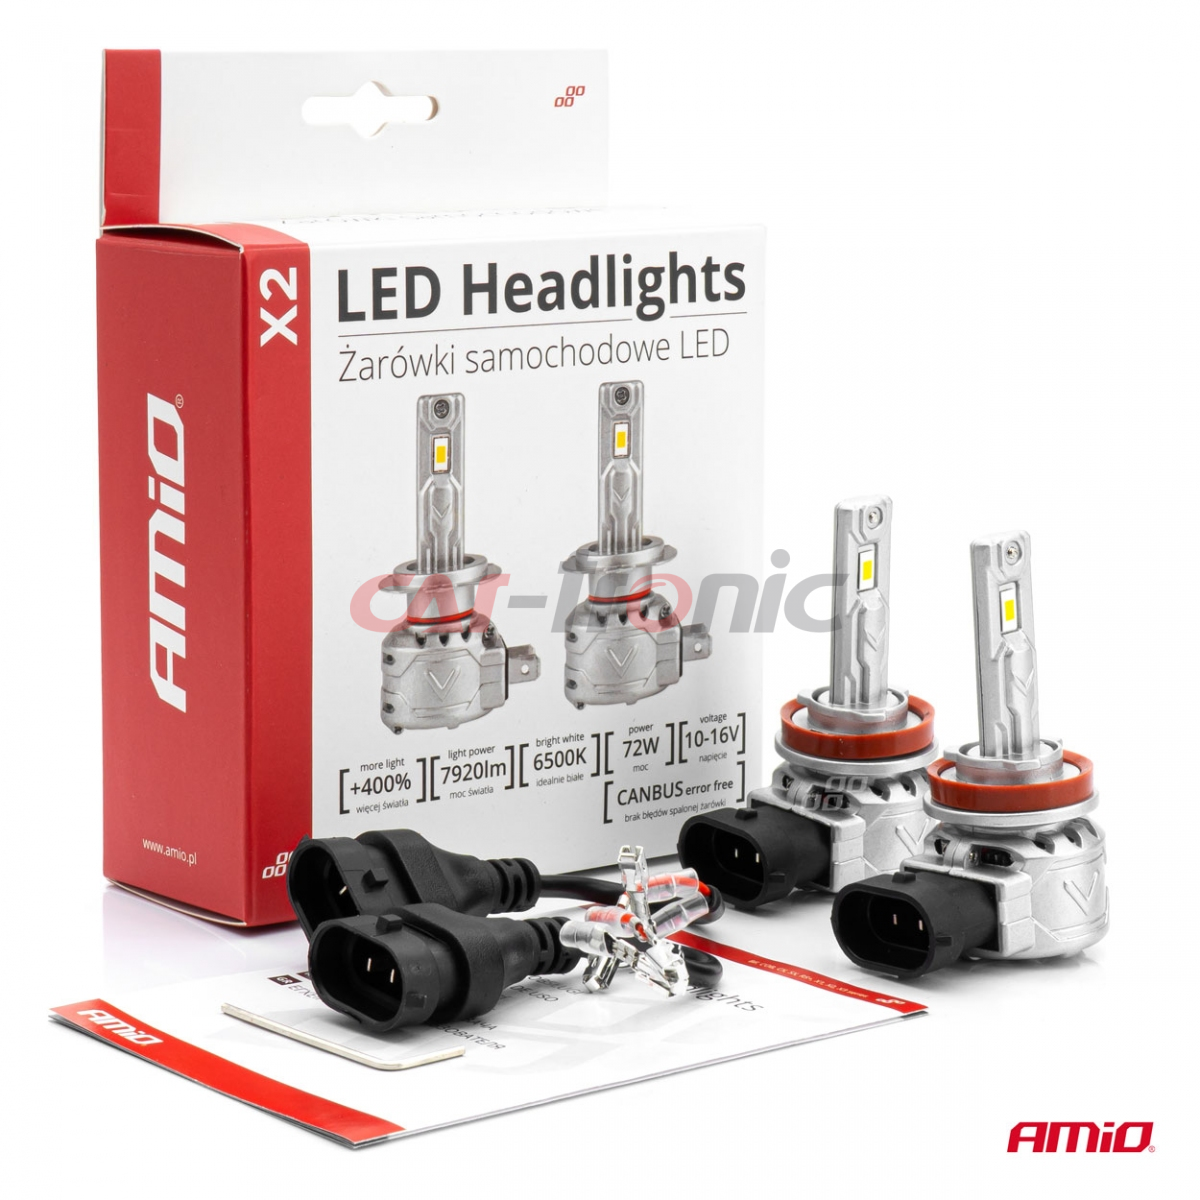 Żarówki samochodowe LED seria X2 H8 H9 H11 H16 6500K Canbus AMIO-02974